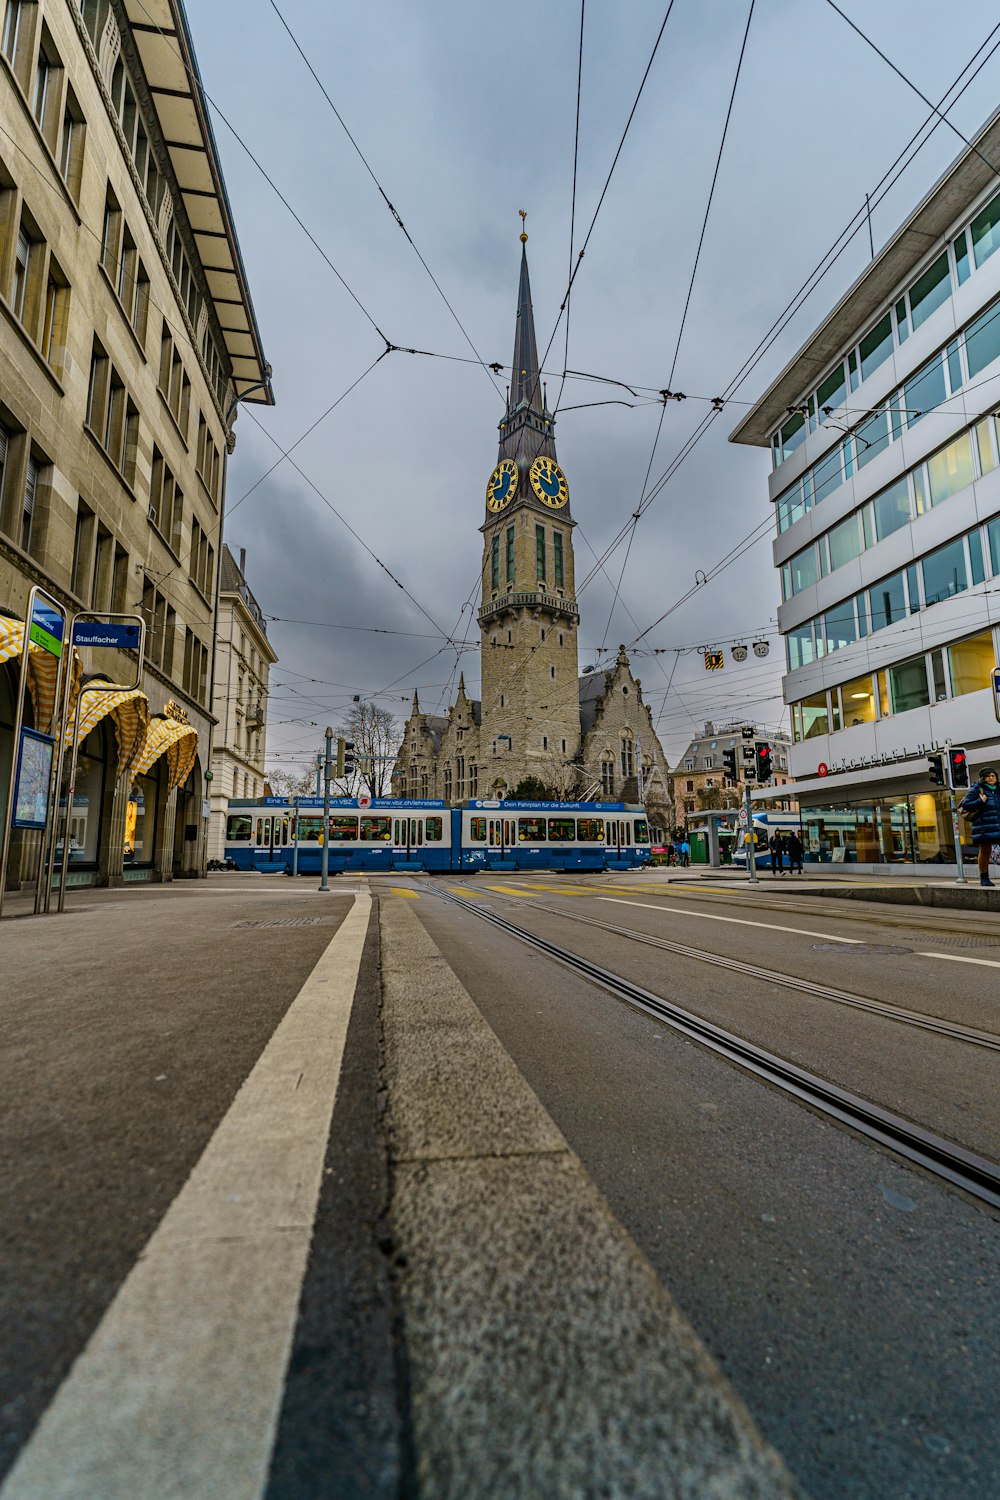 a city street with a train on the tracks